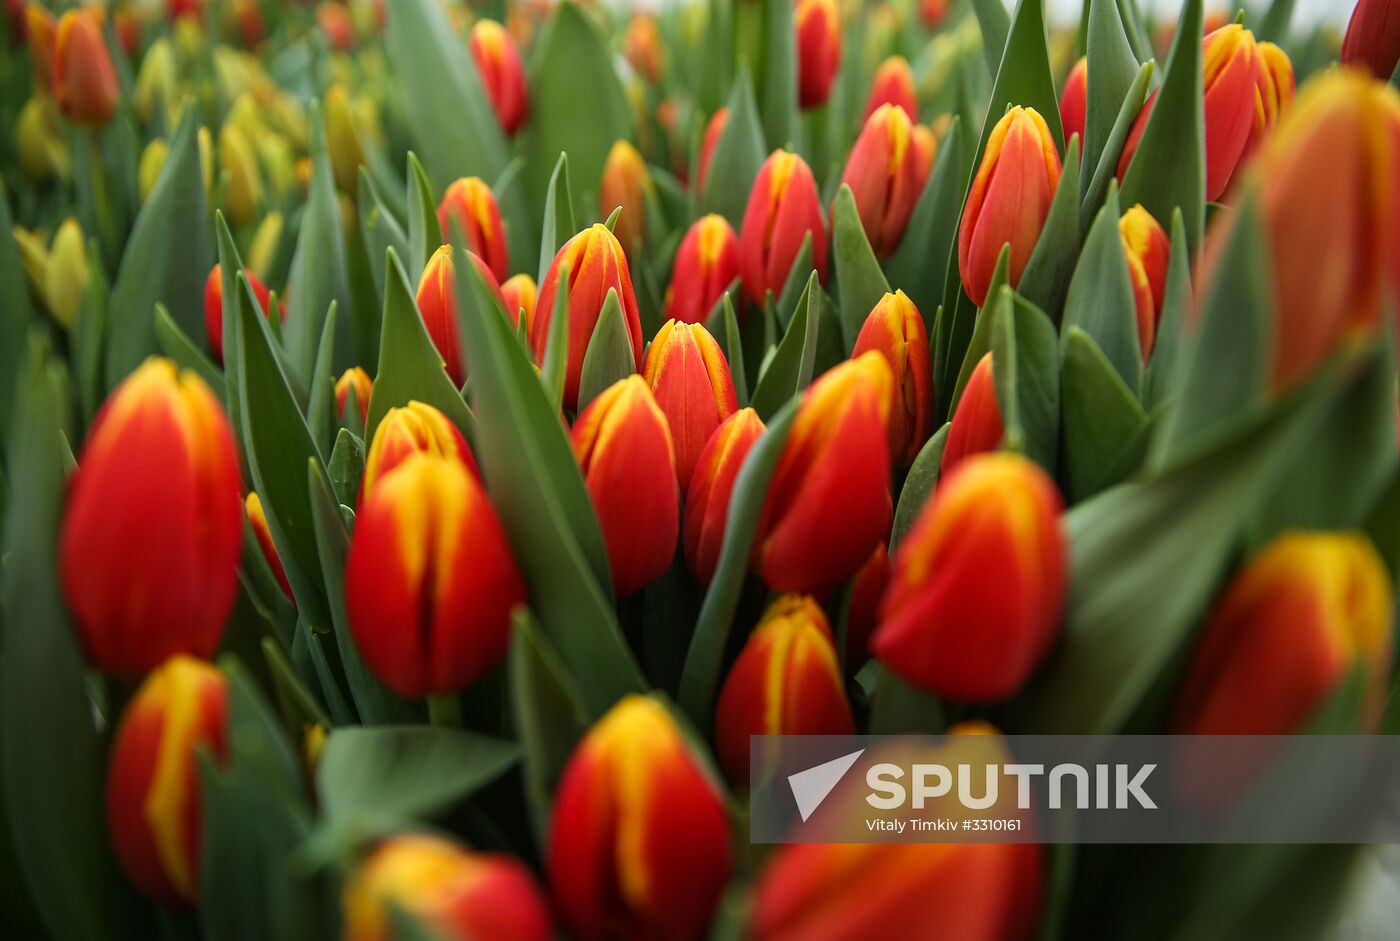 Growing tulips in Krasnodar Territory